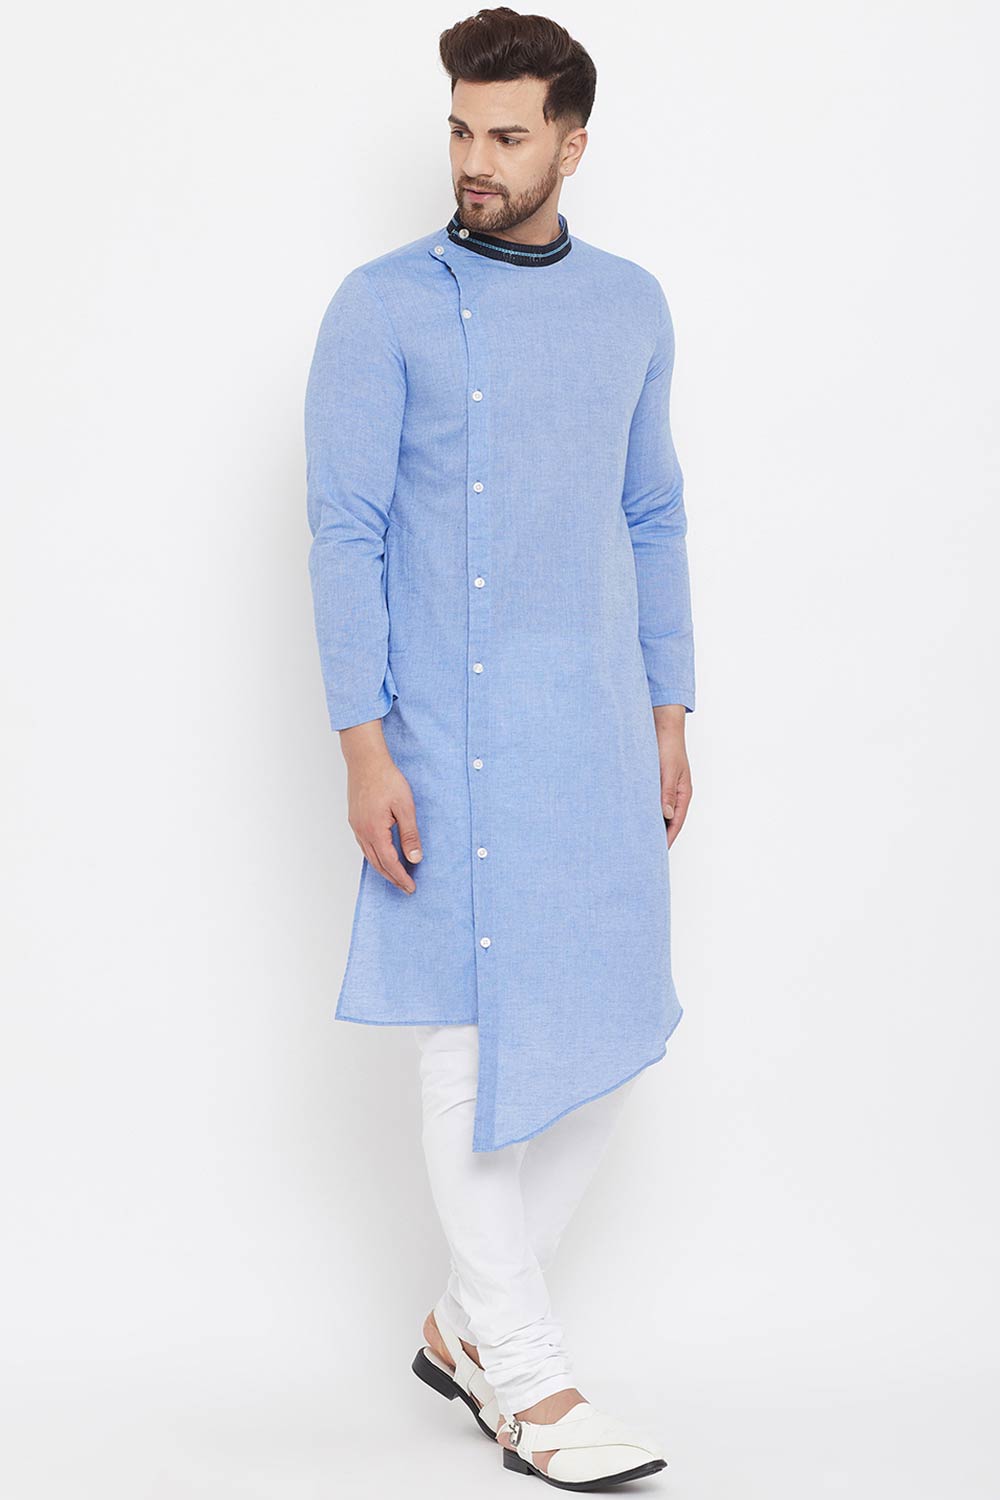 Buy Men's Blended Cotton Solid Kurta in Blue - Side